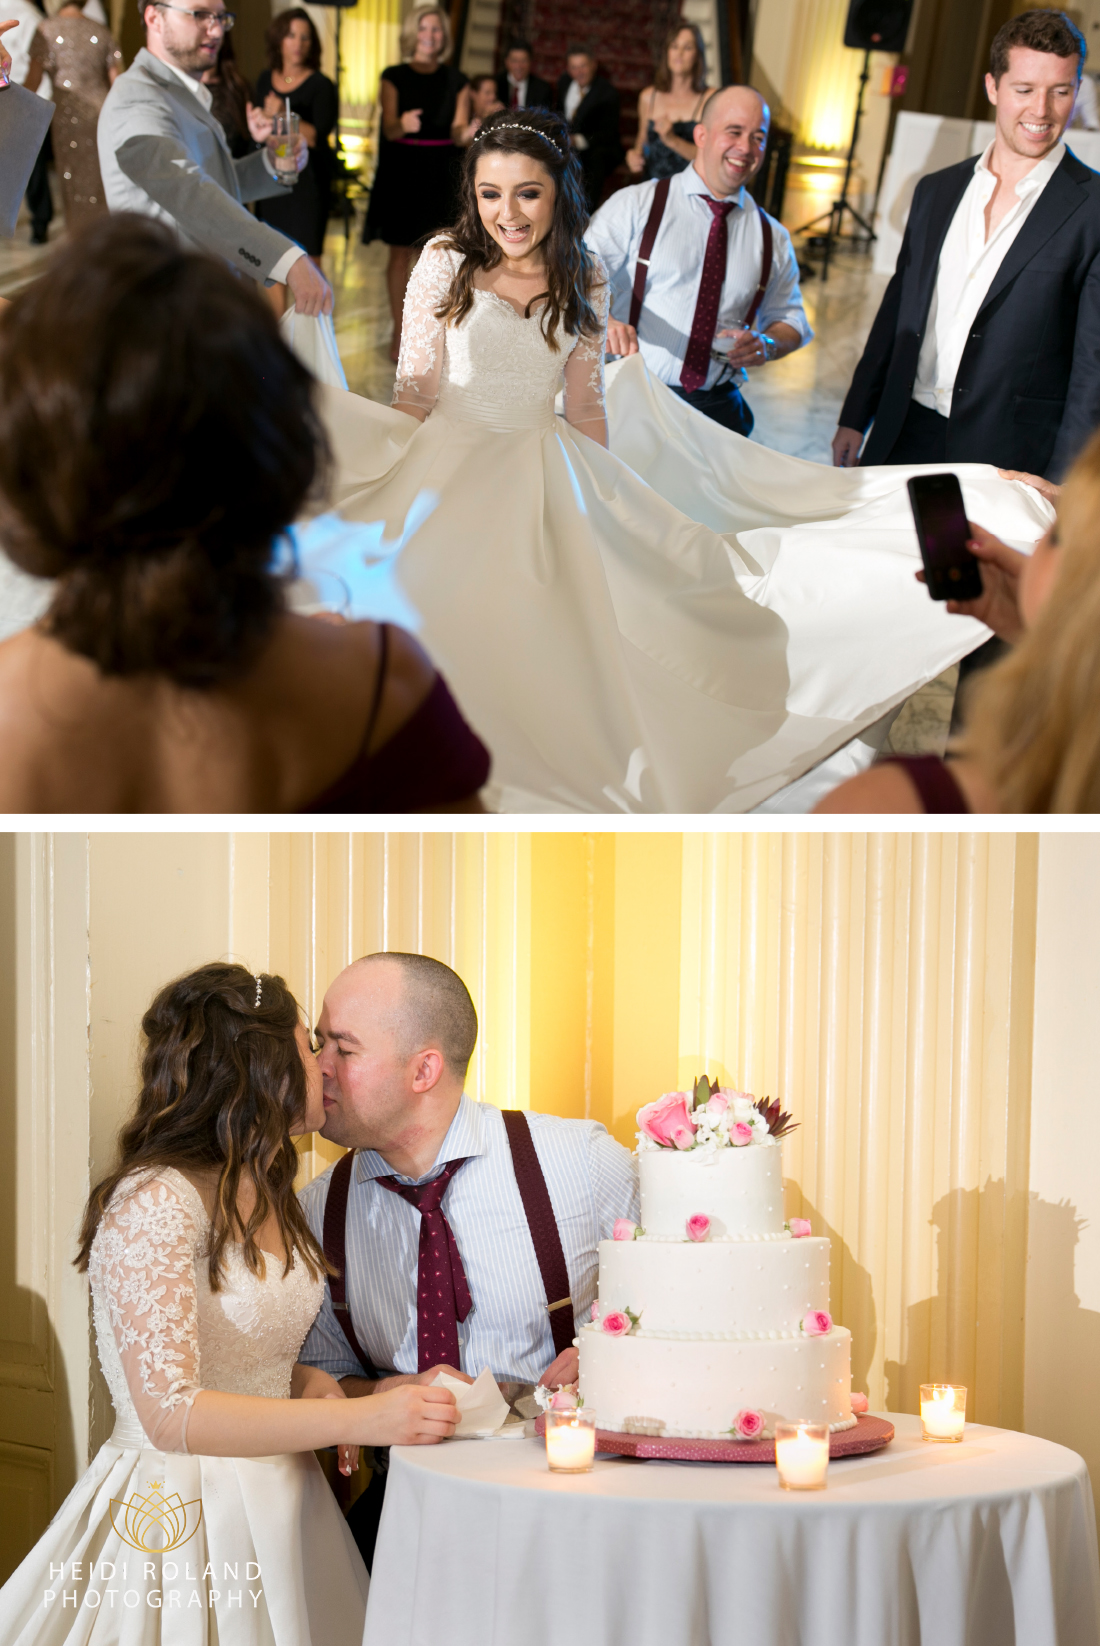 cake cutting and bride dancingat Racquet Club of Philadelphia wedding